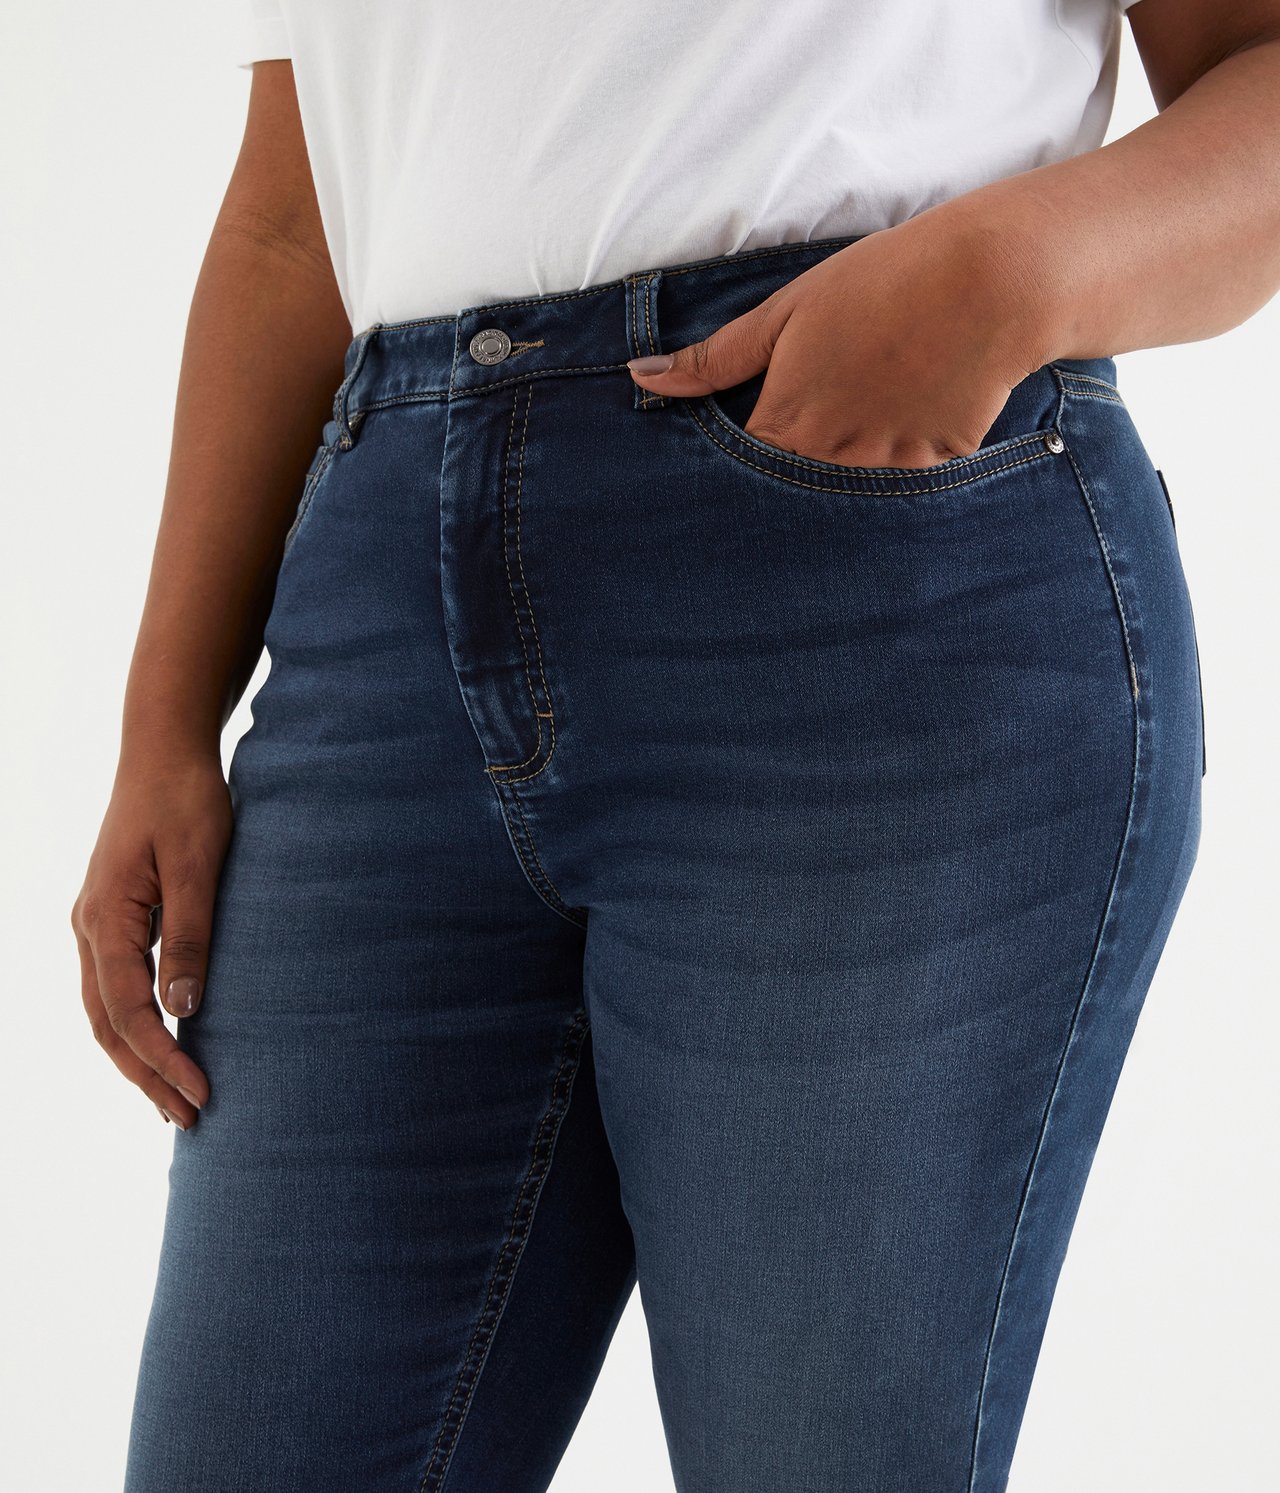 Ebba slim jeans - Mörk denim - 182cm / Storlek: 50 - 2